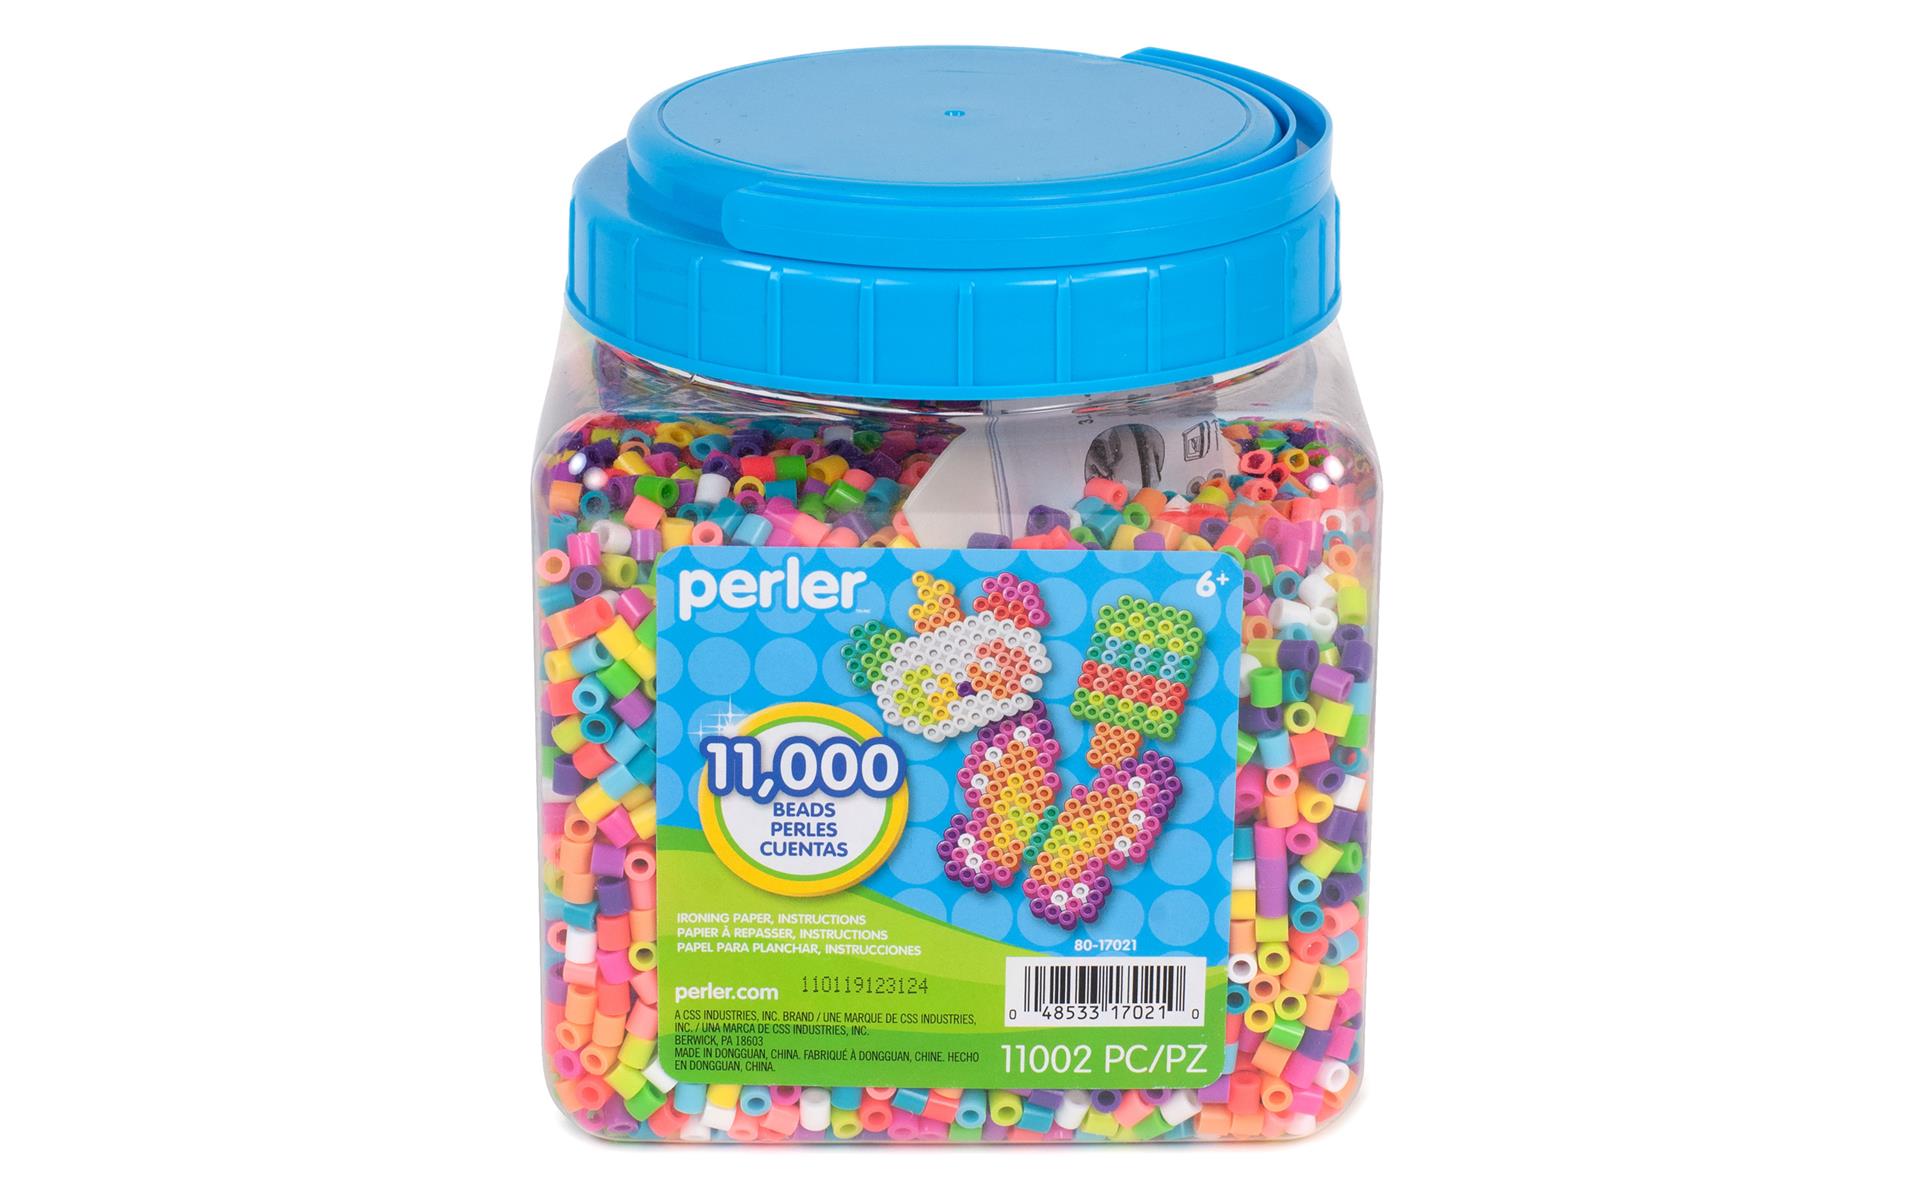 Perler Fused Bead Jar 11000pc Summer Mix | eBay